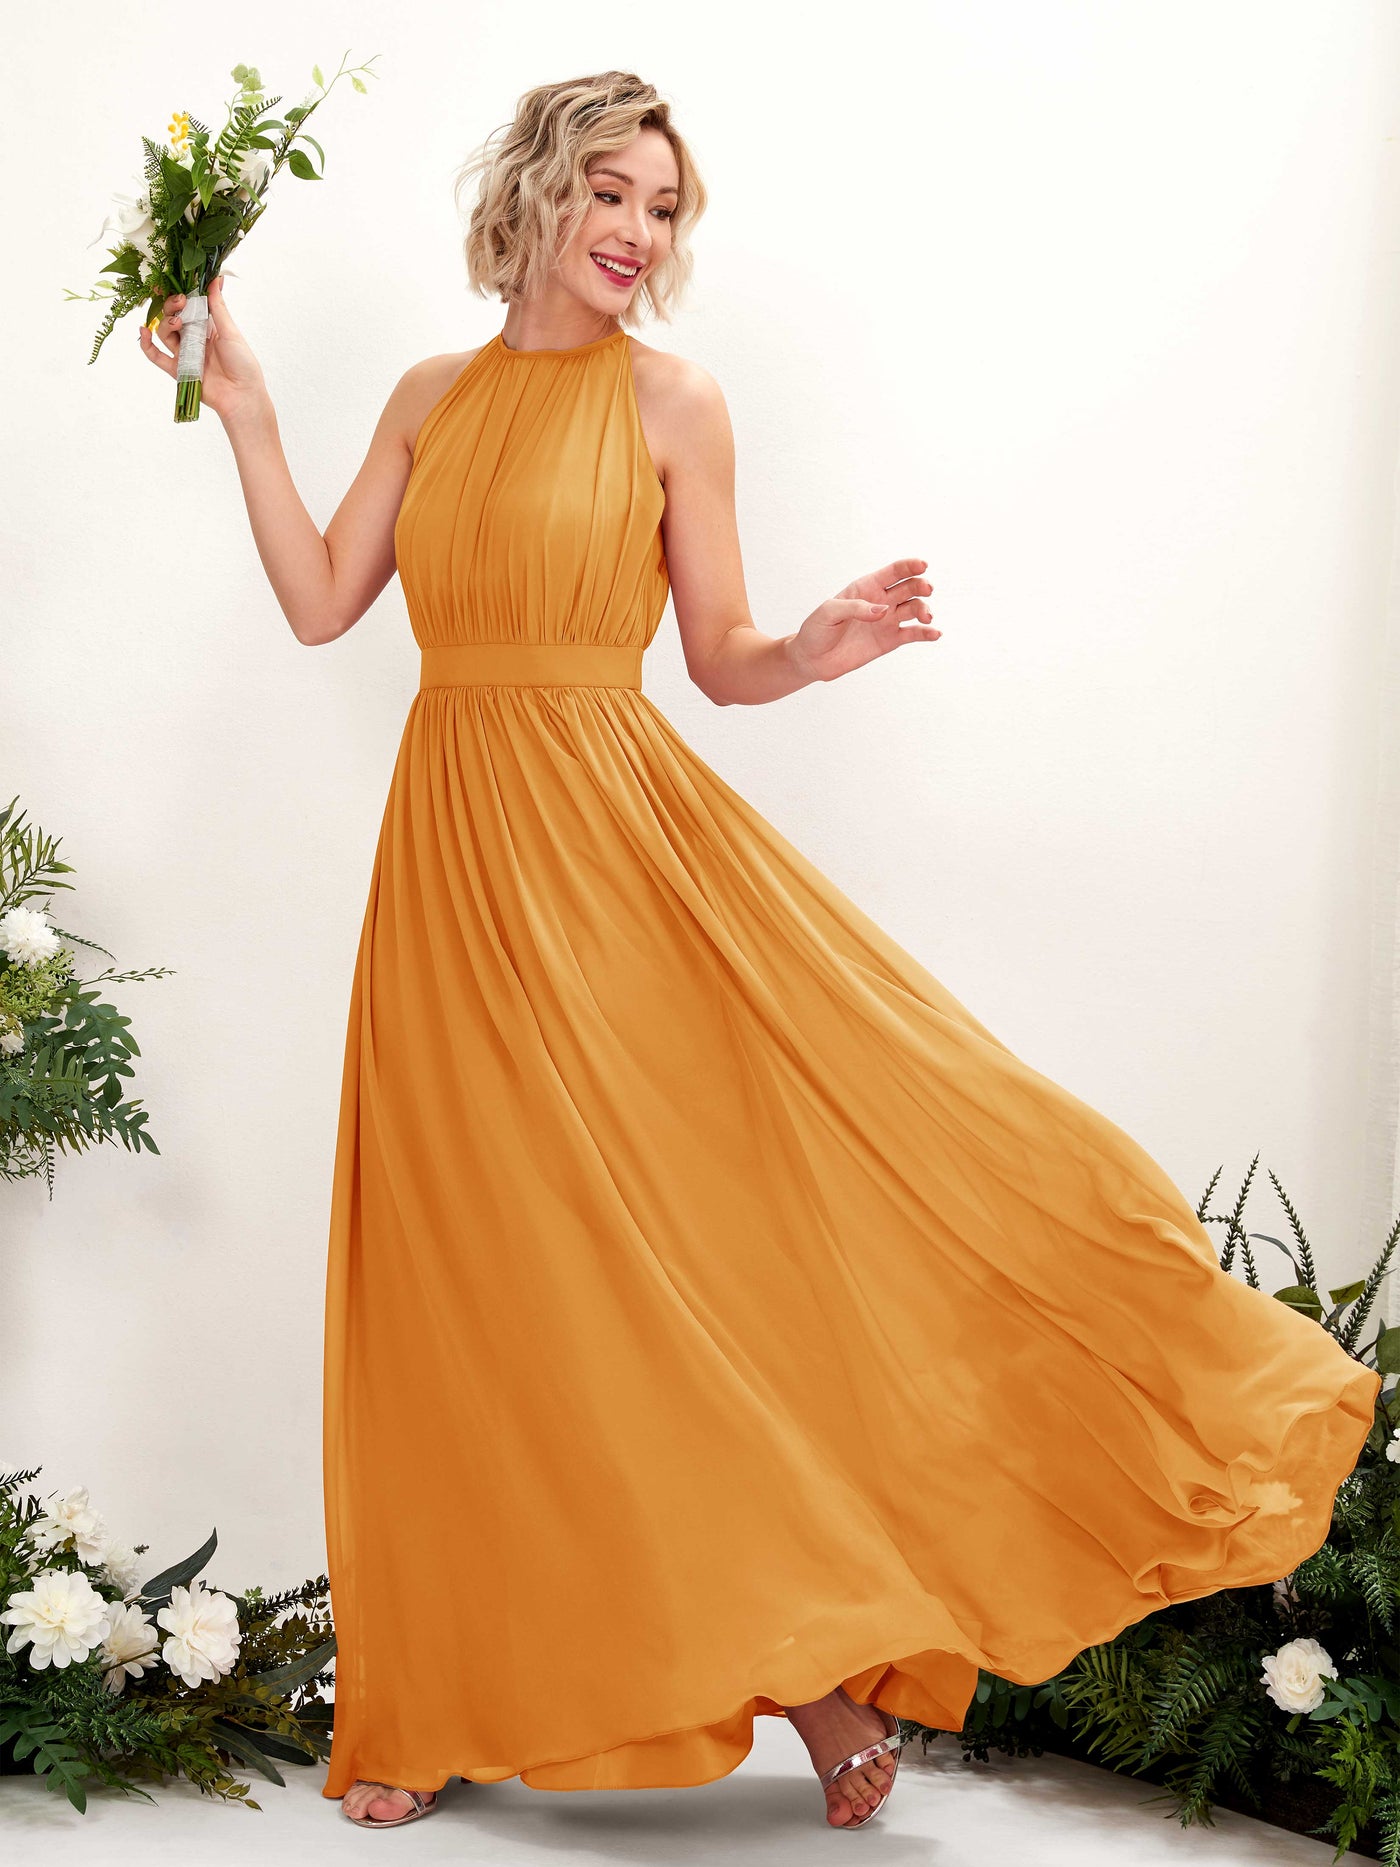 Mango Bridesmaid Dresses Bridesmaid Dress A-line Chiffon Halter Full Length Sleeveless Wedding Party Dress (81223102)#color_mango